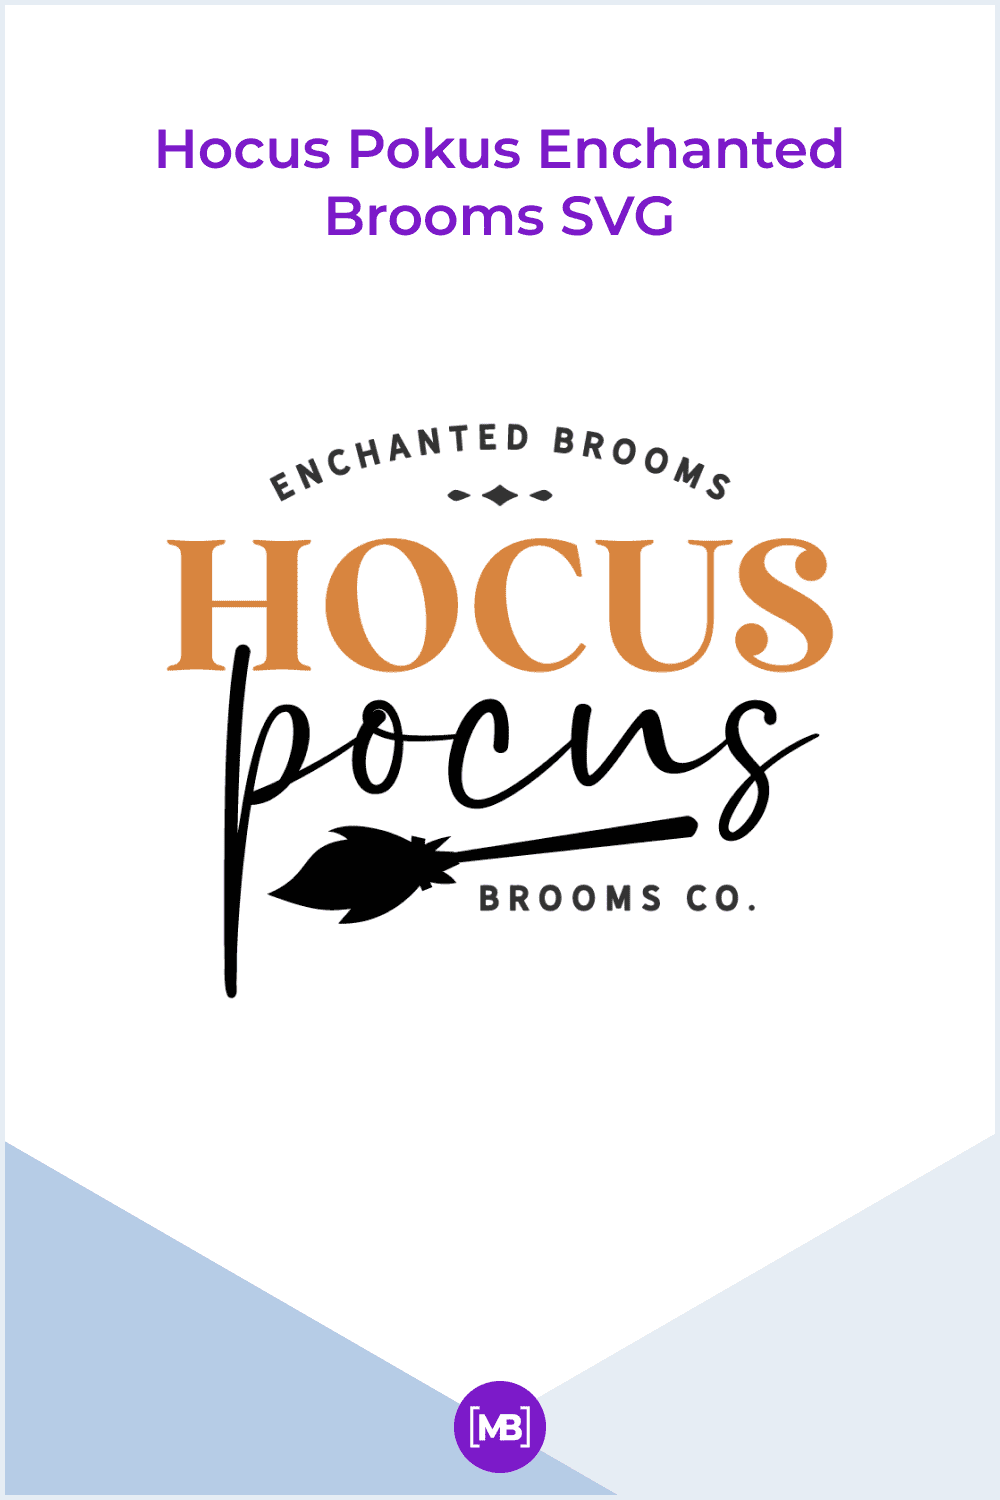 Hocus Pokus Enchanted Brooms SVG.